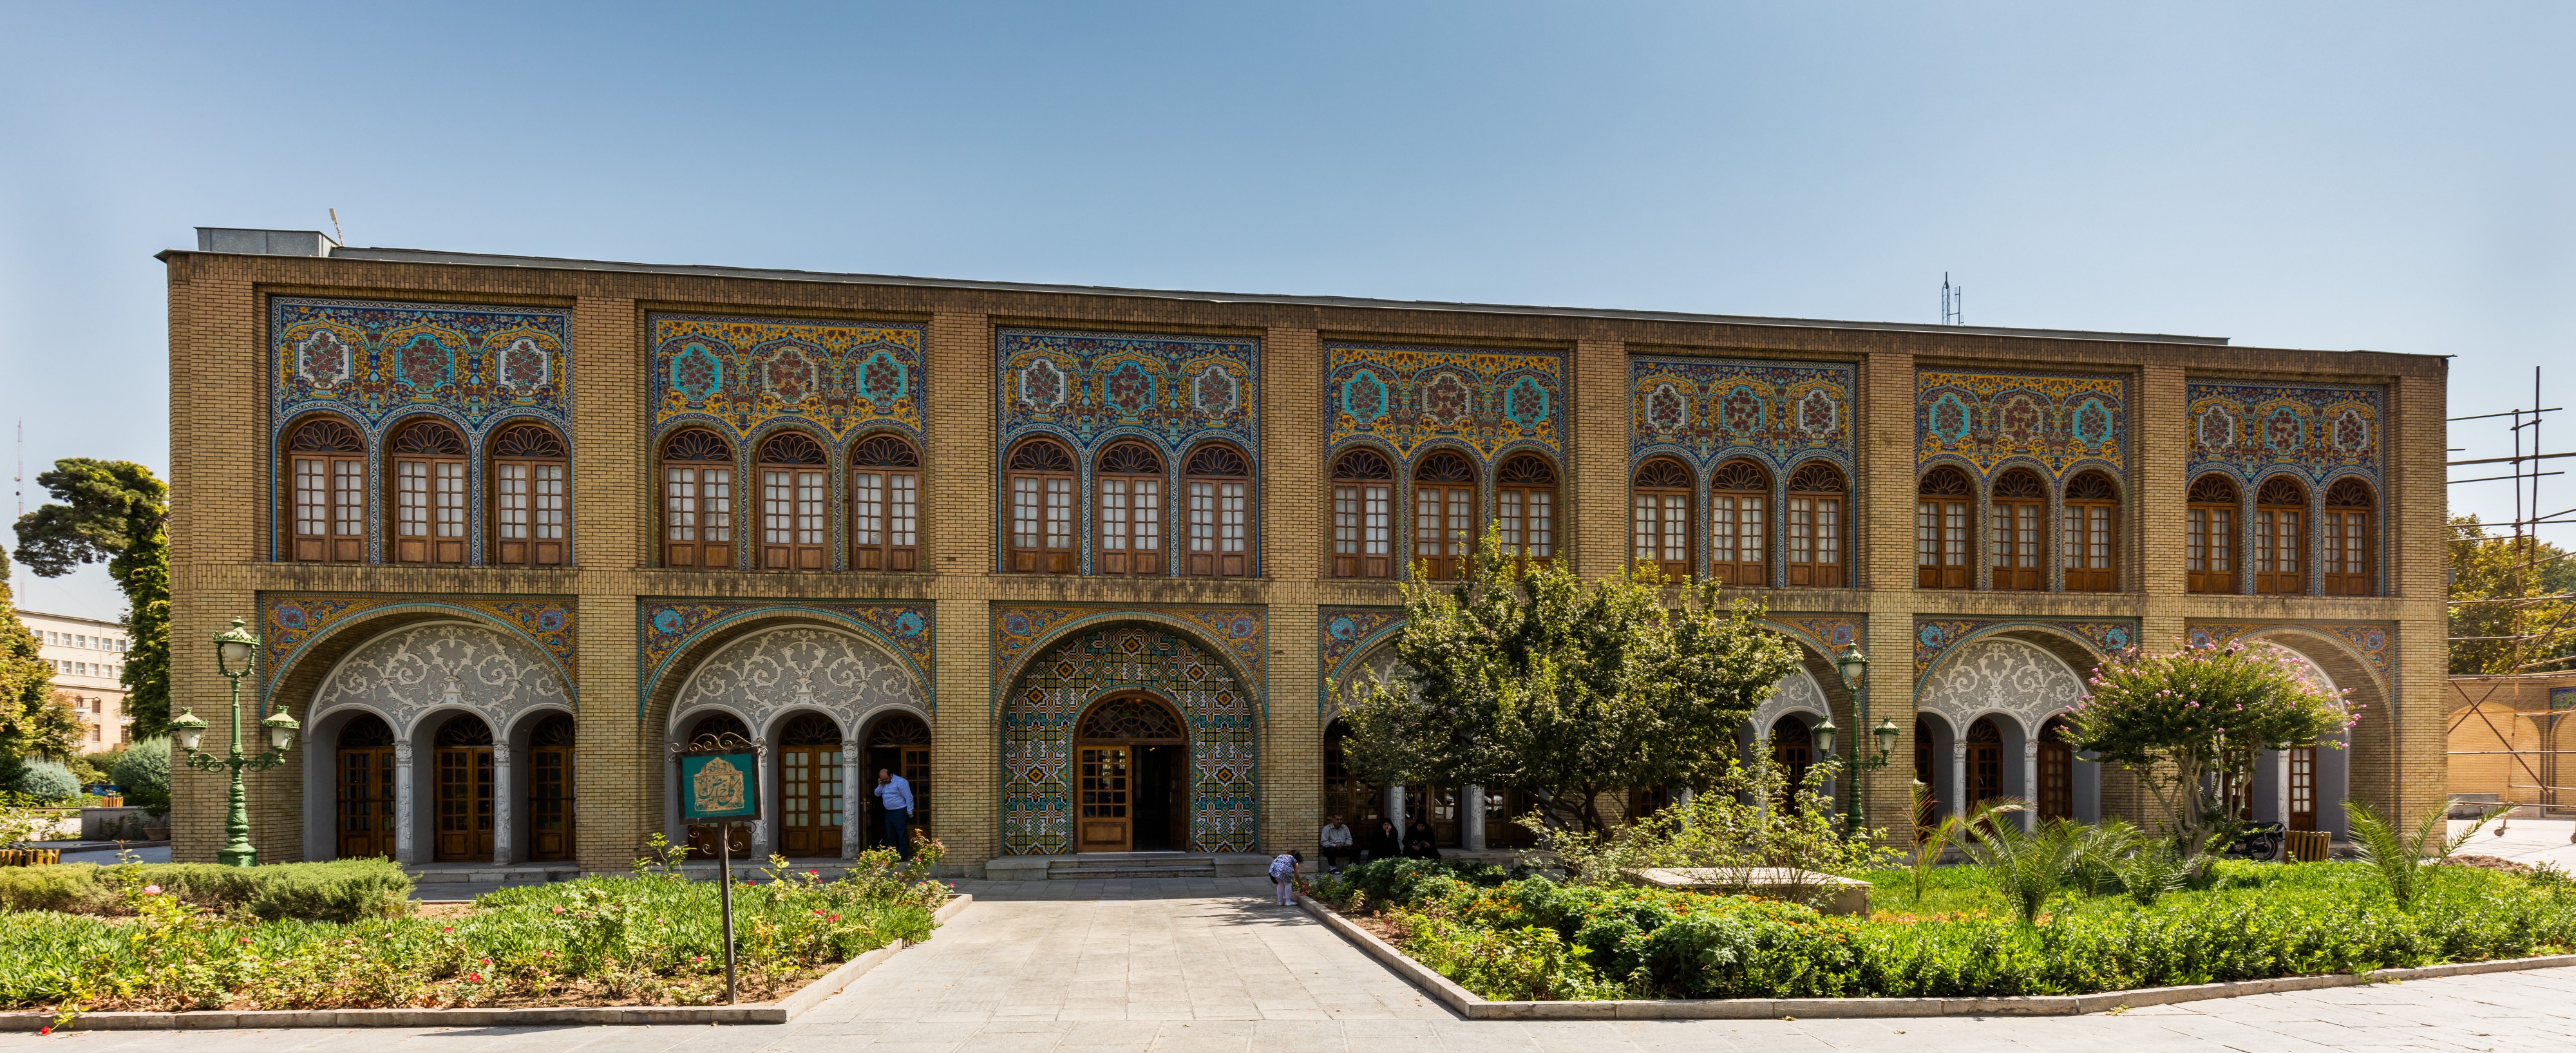 Palacio de Golestán, Teherán, Irán, 2016-09-17, DD 02